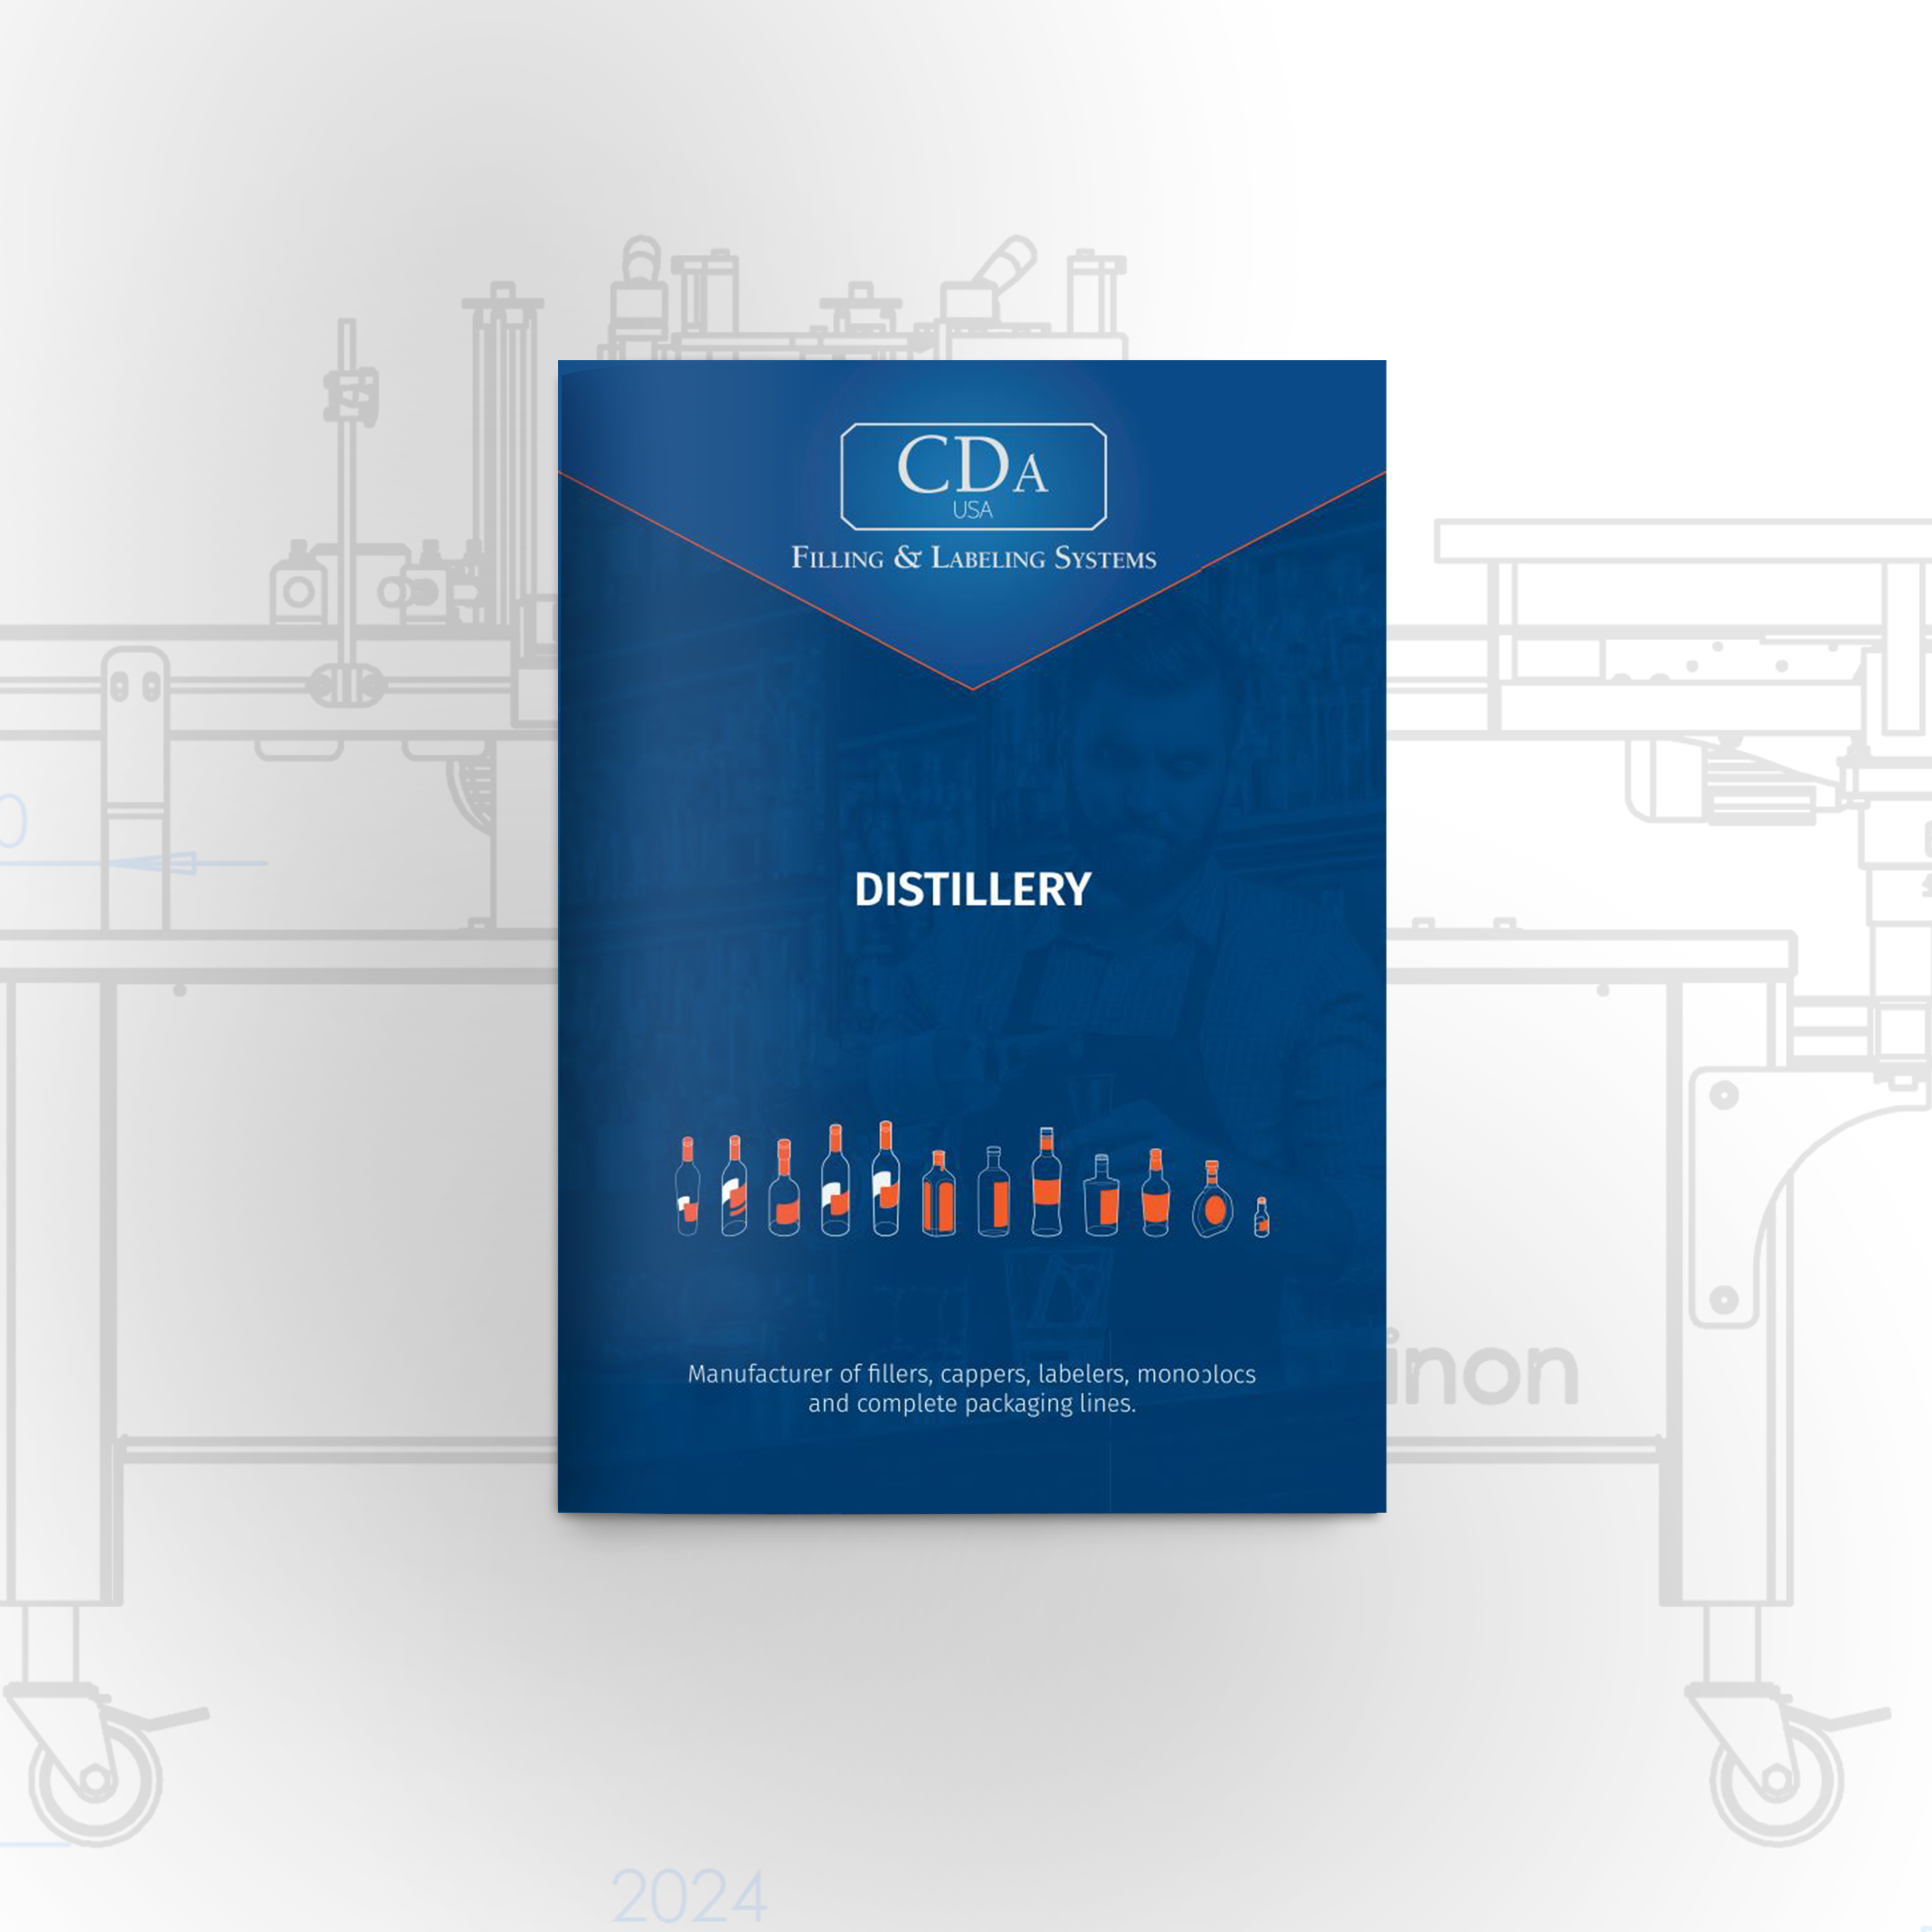 Catalog of distillery packaging machines